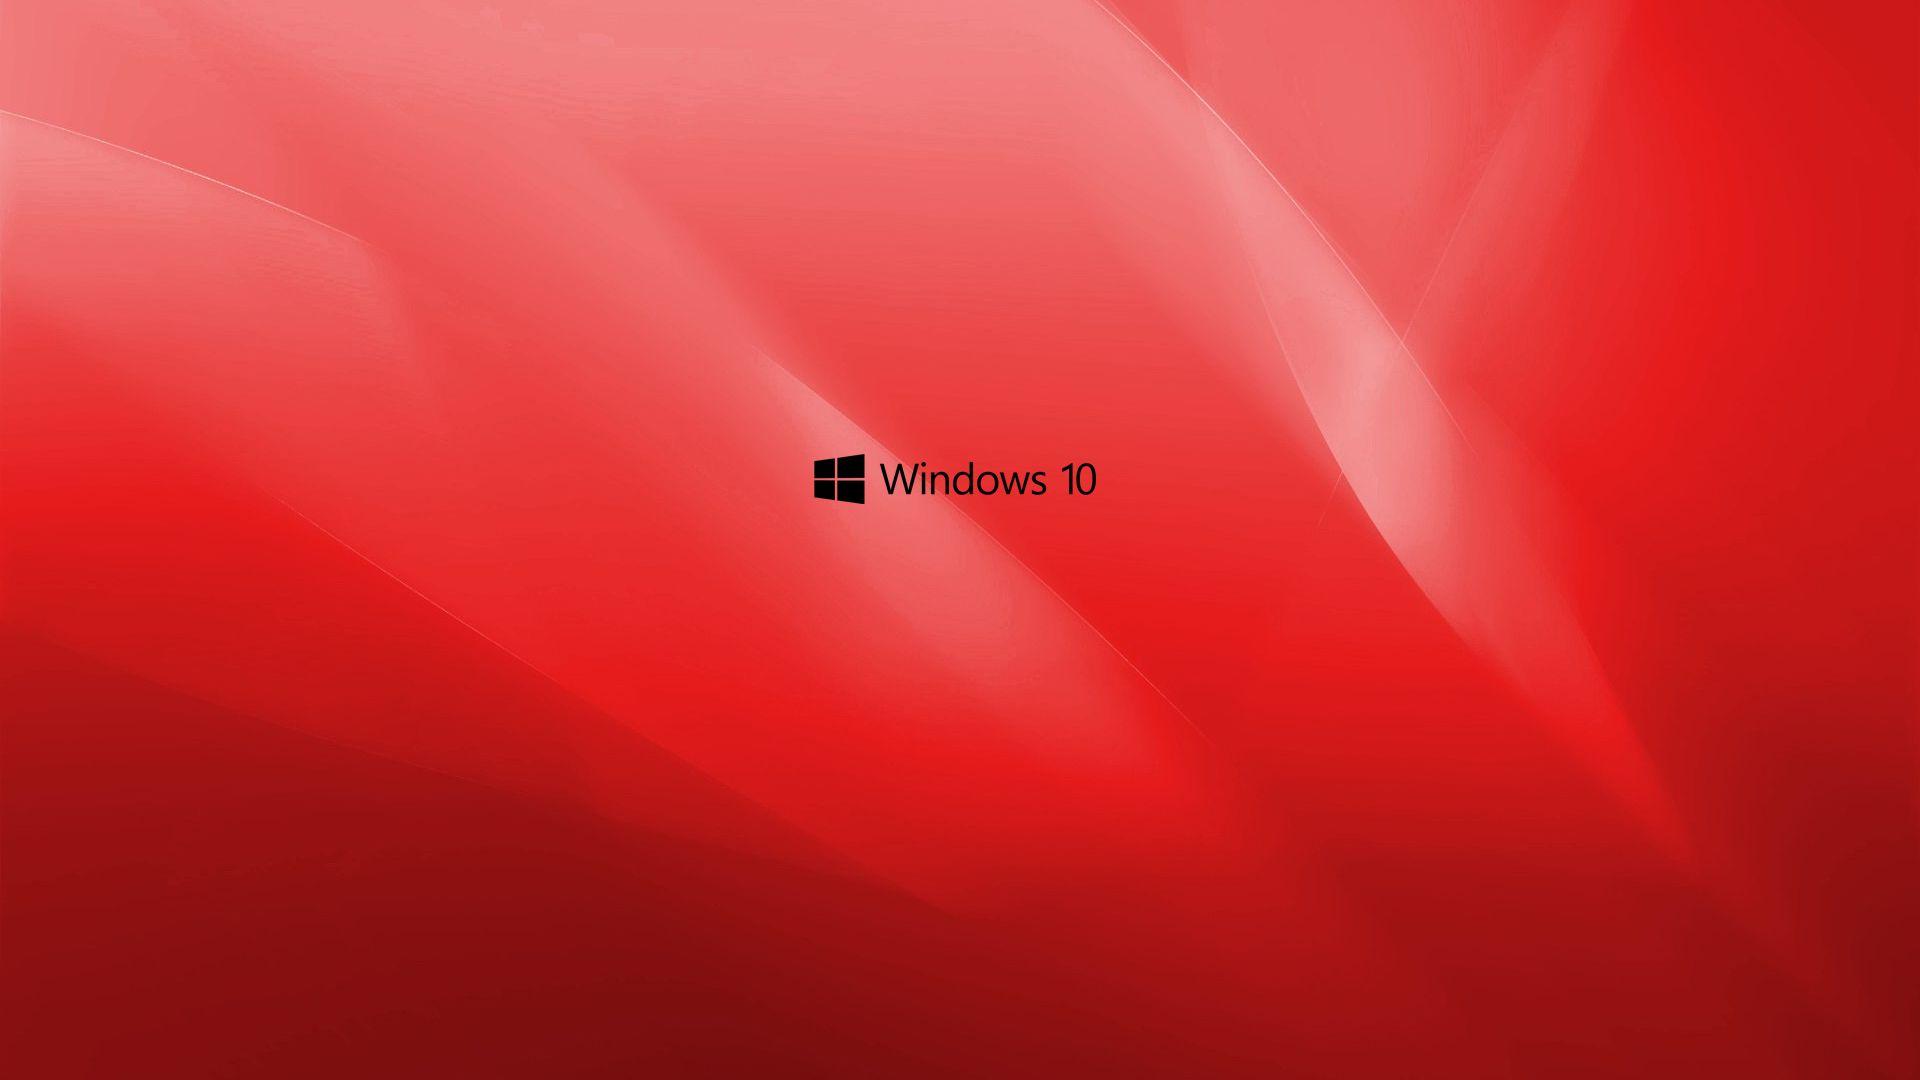 4K wallpaper: Windows 10 Red Wallpaper Hd 1920x1080